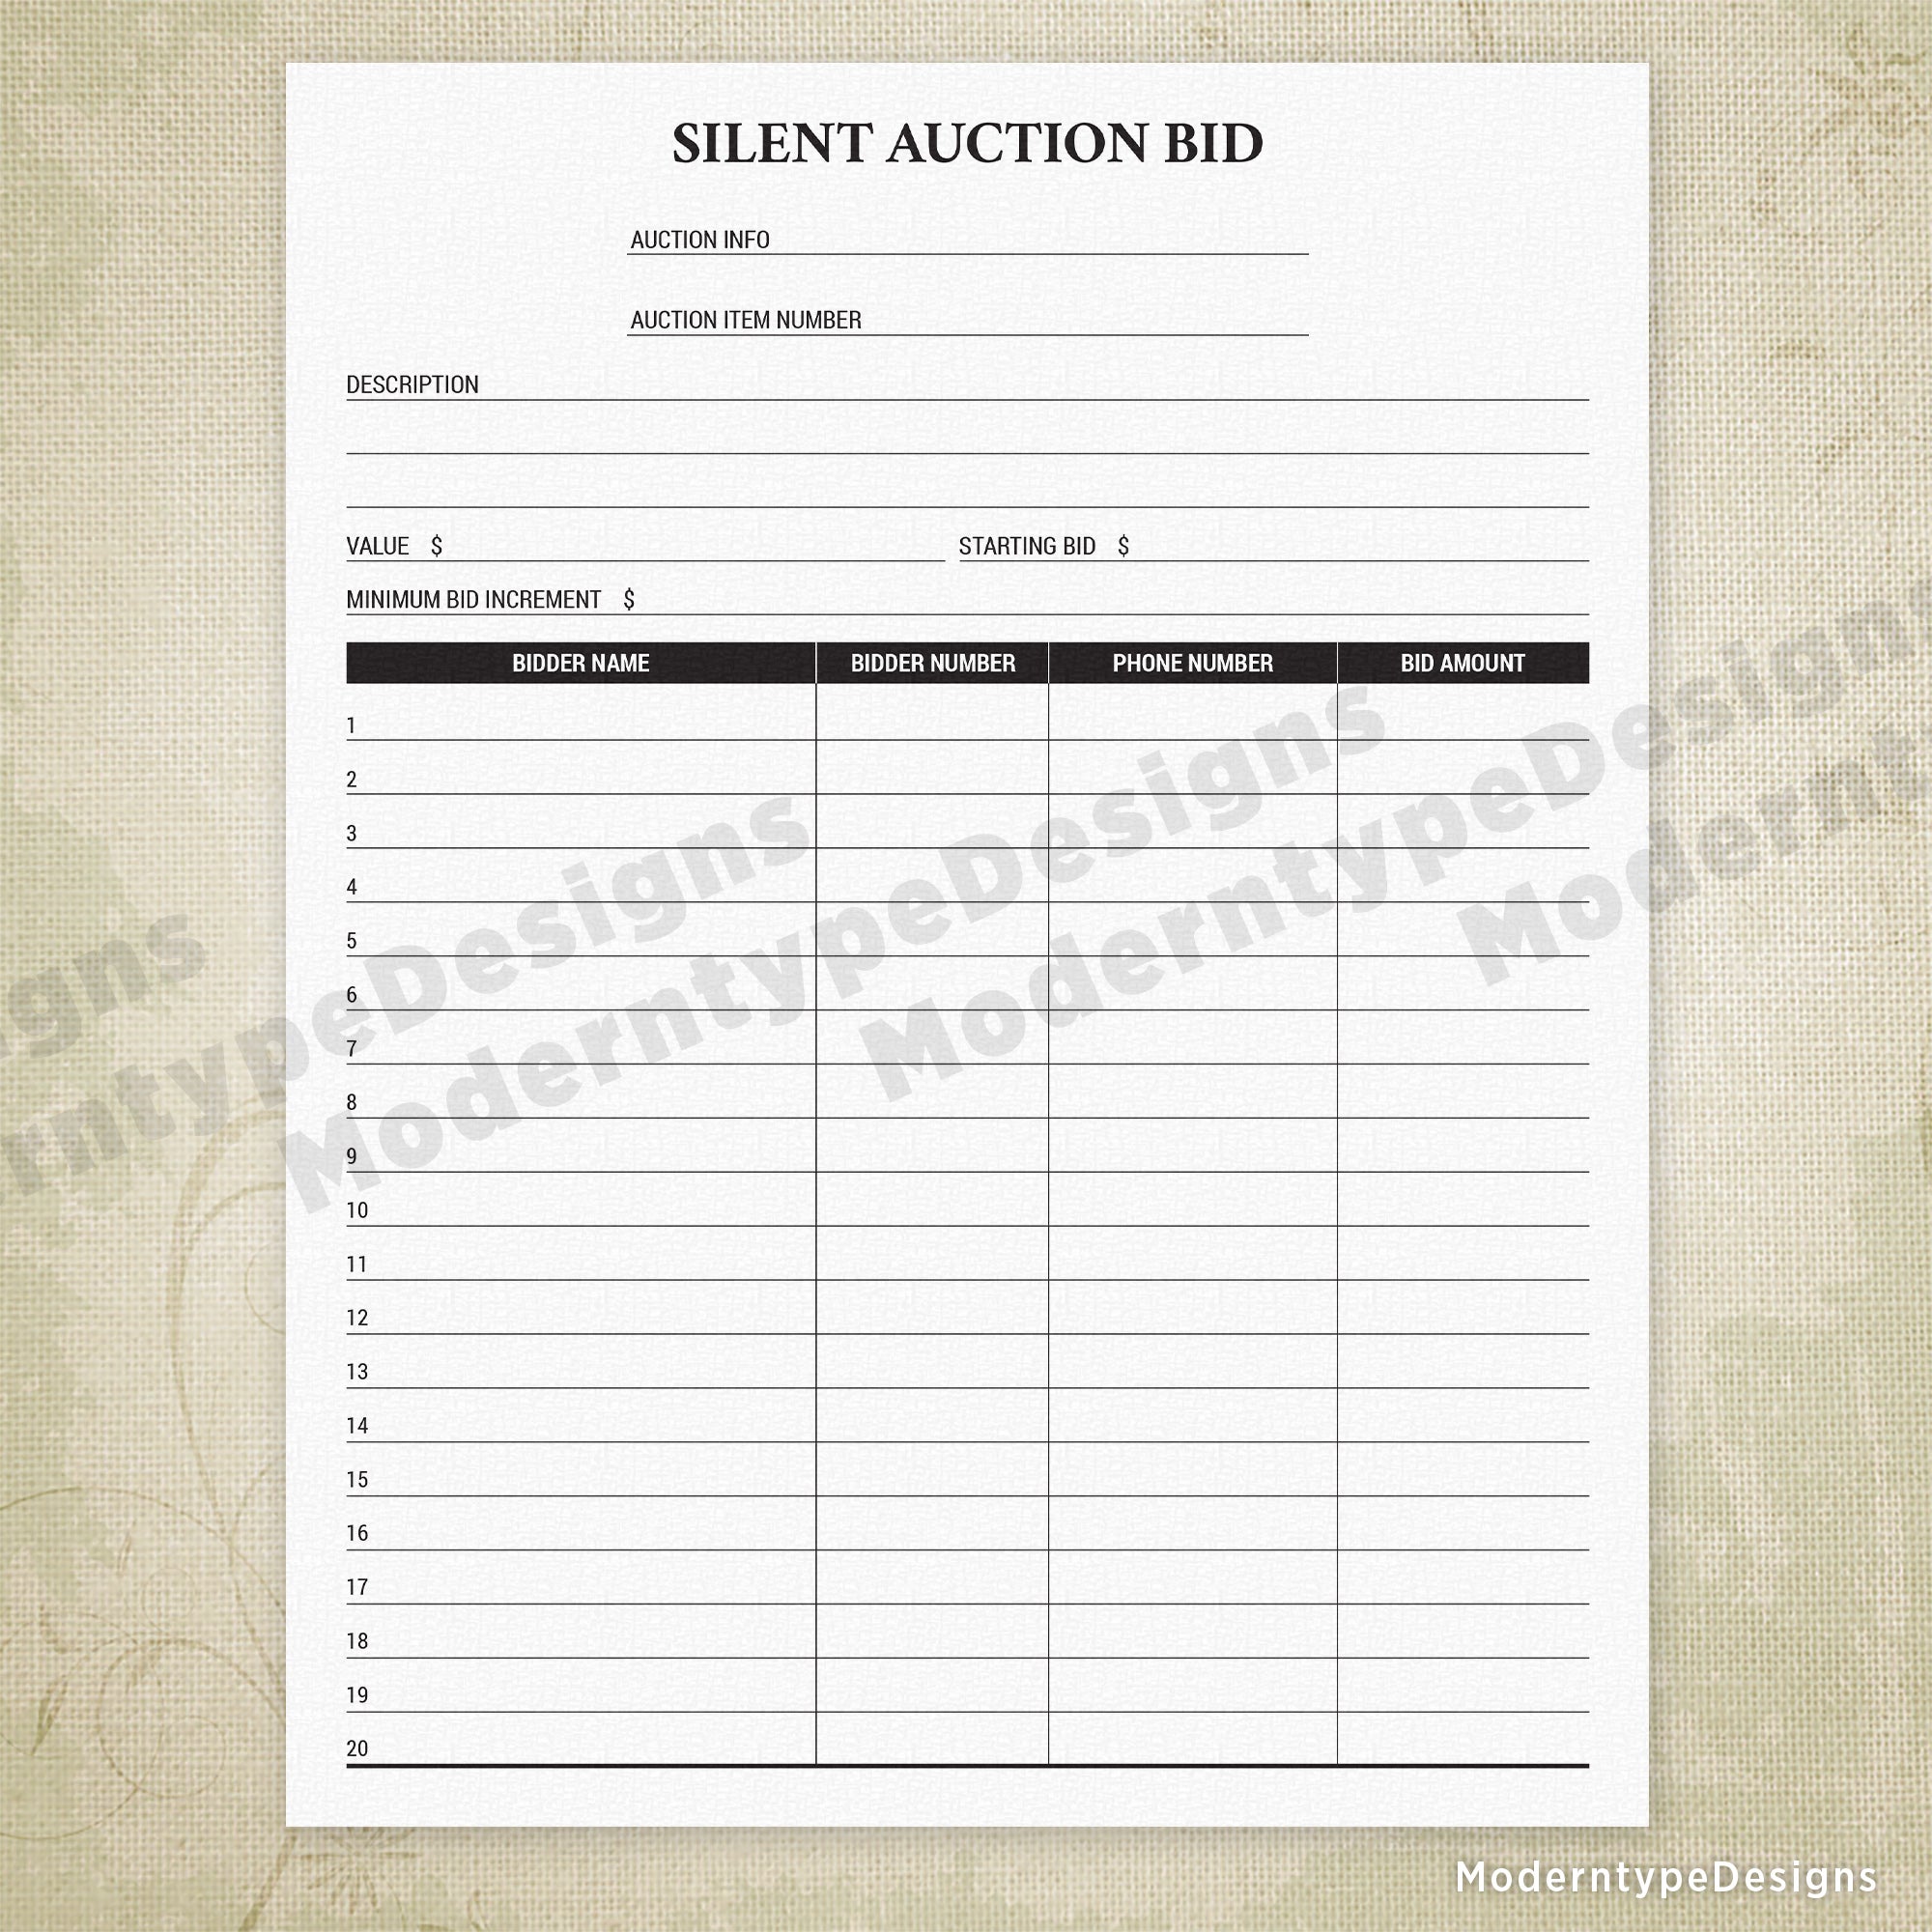 Silent Auction Bid Sheet Printable